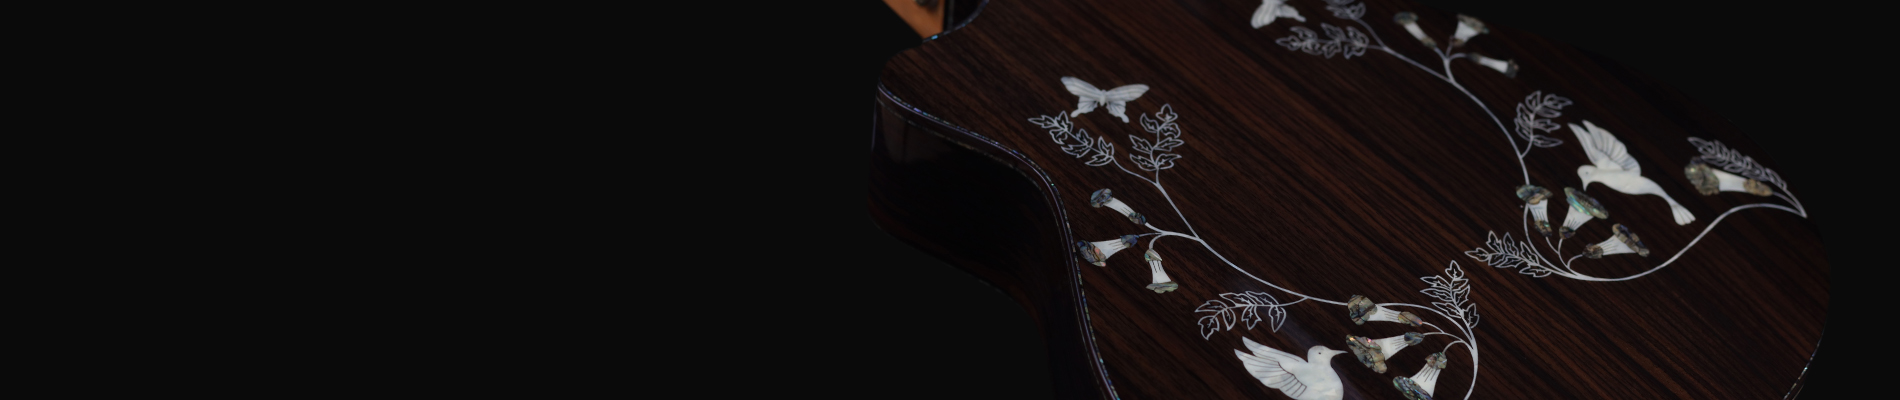 Buy High-End Acoustic Guitars Online Dubai | Intune Instruments